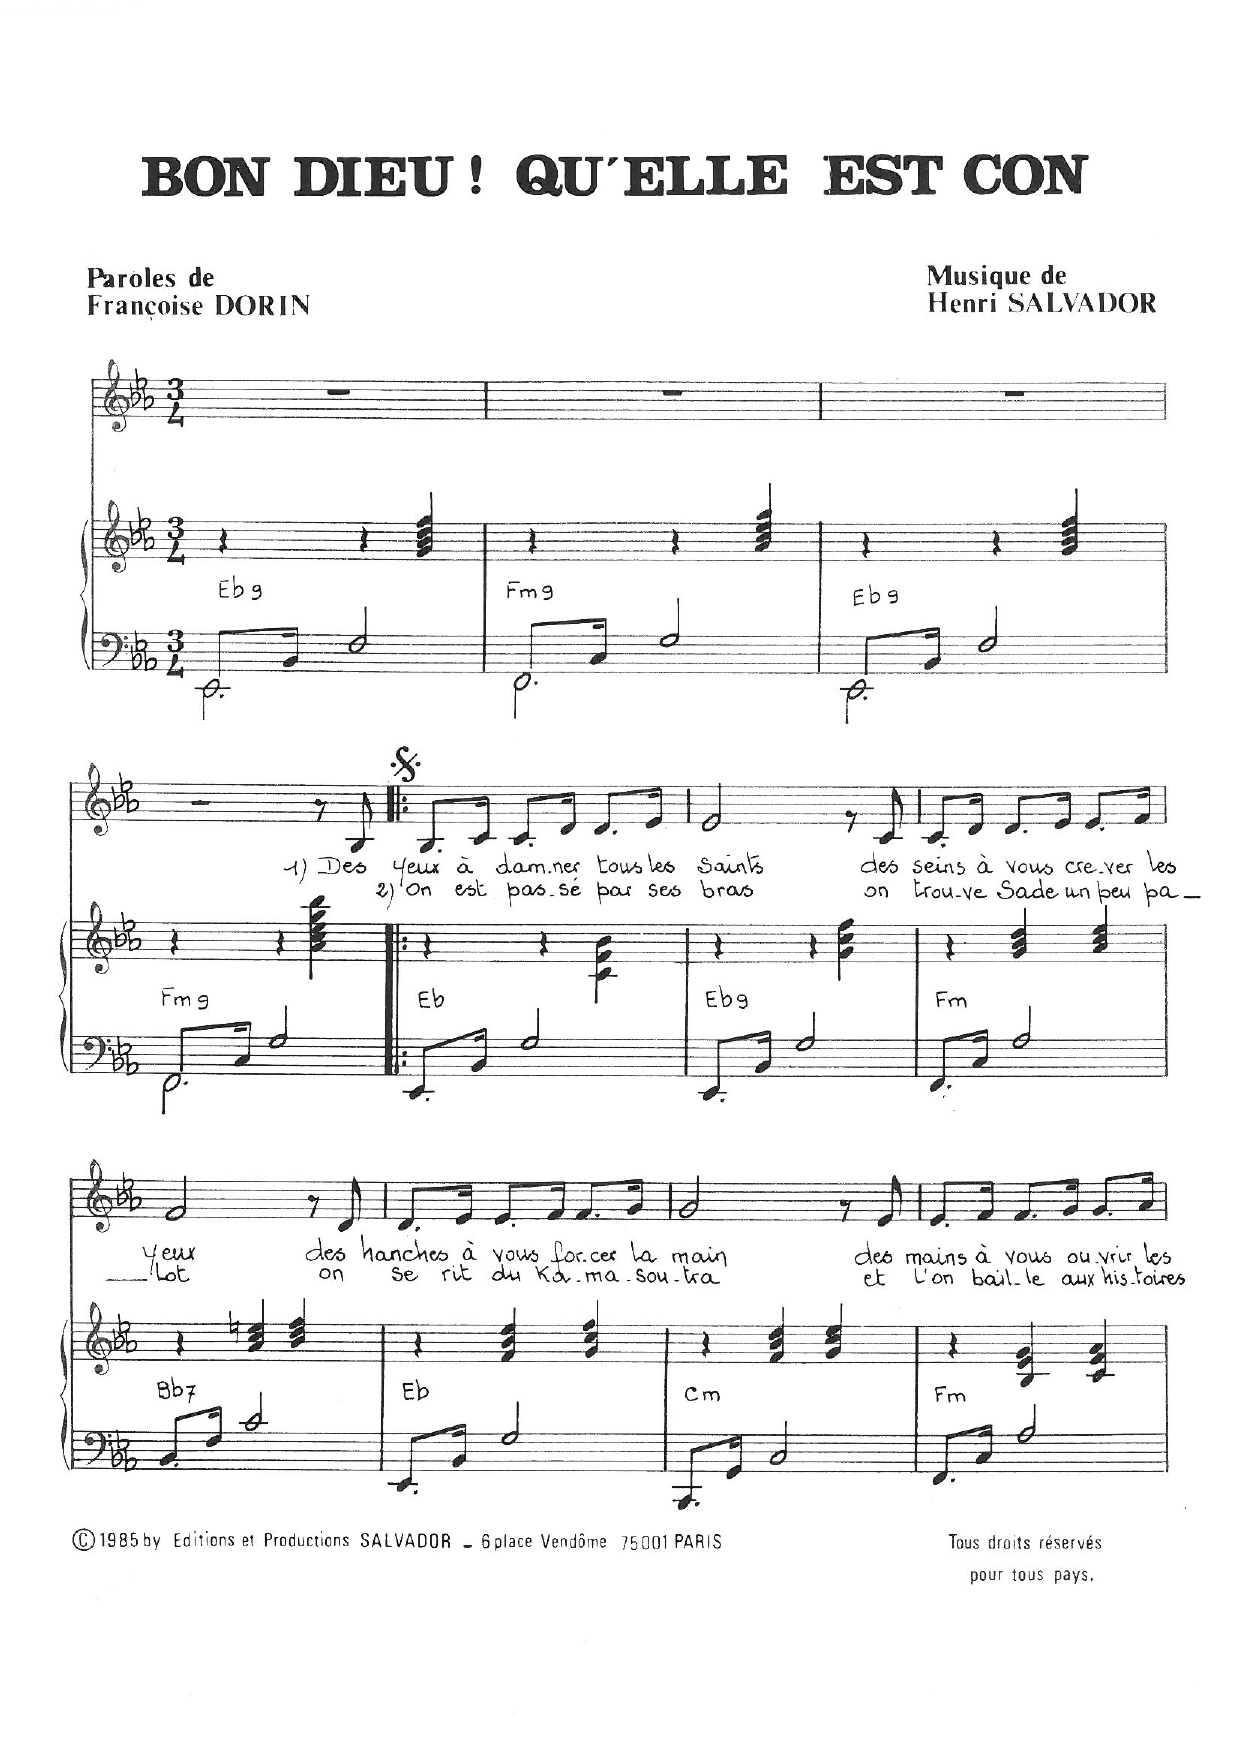 Henri Salvador Bon Dieu! Qu'elle Est Con Sheet Music Notes & Chords for Piano & Vocal - Download or Print PDF